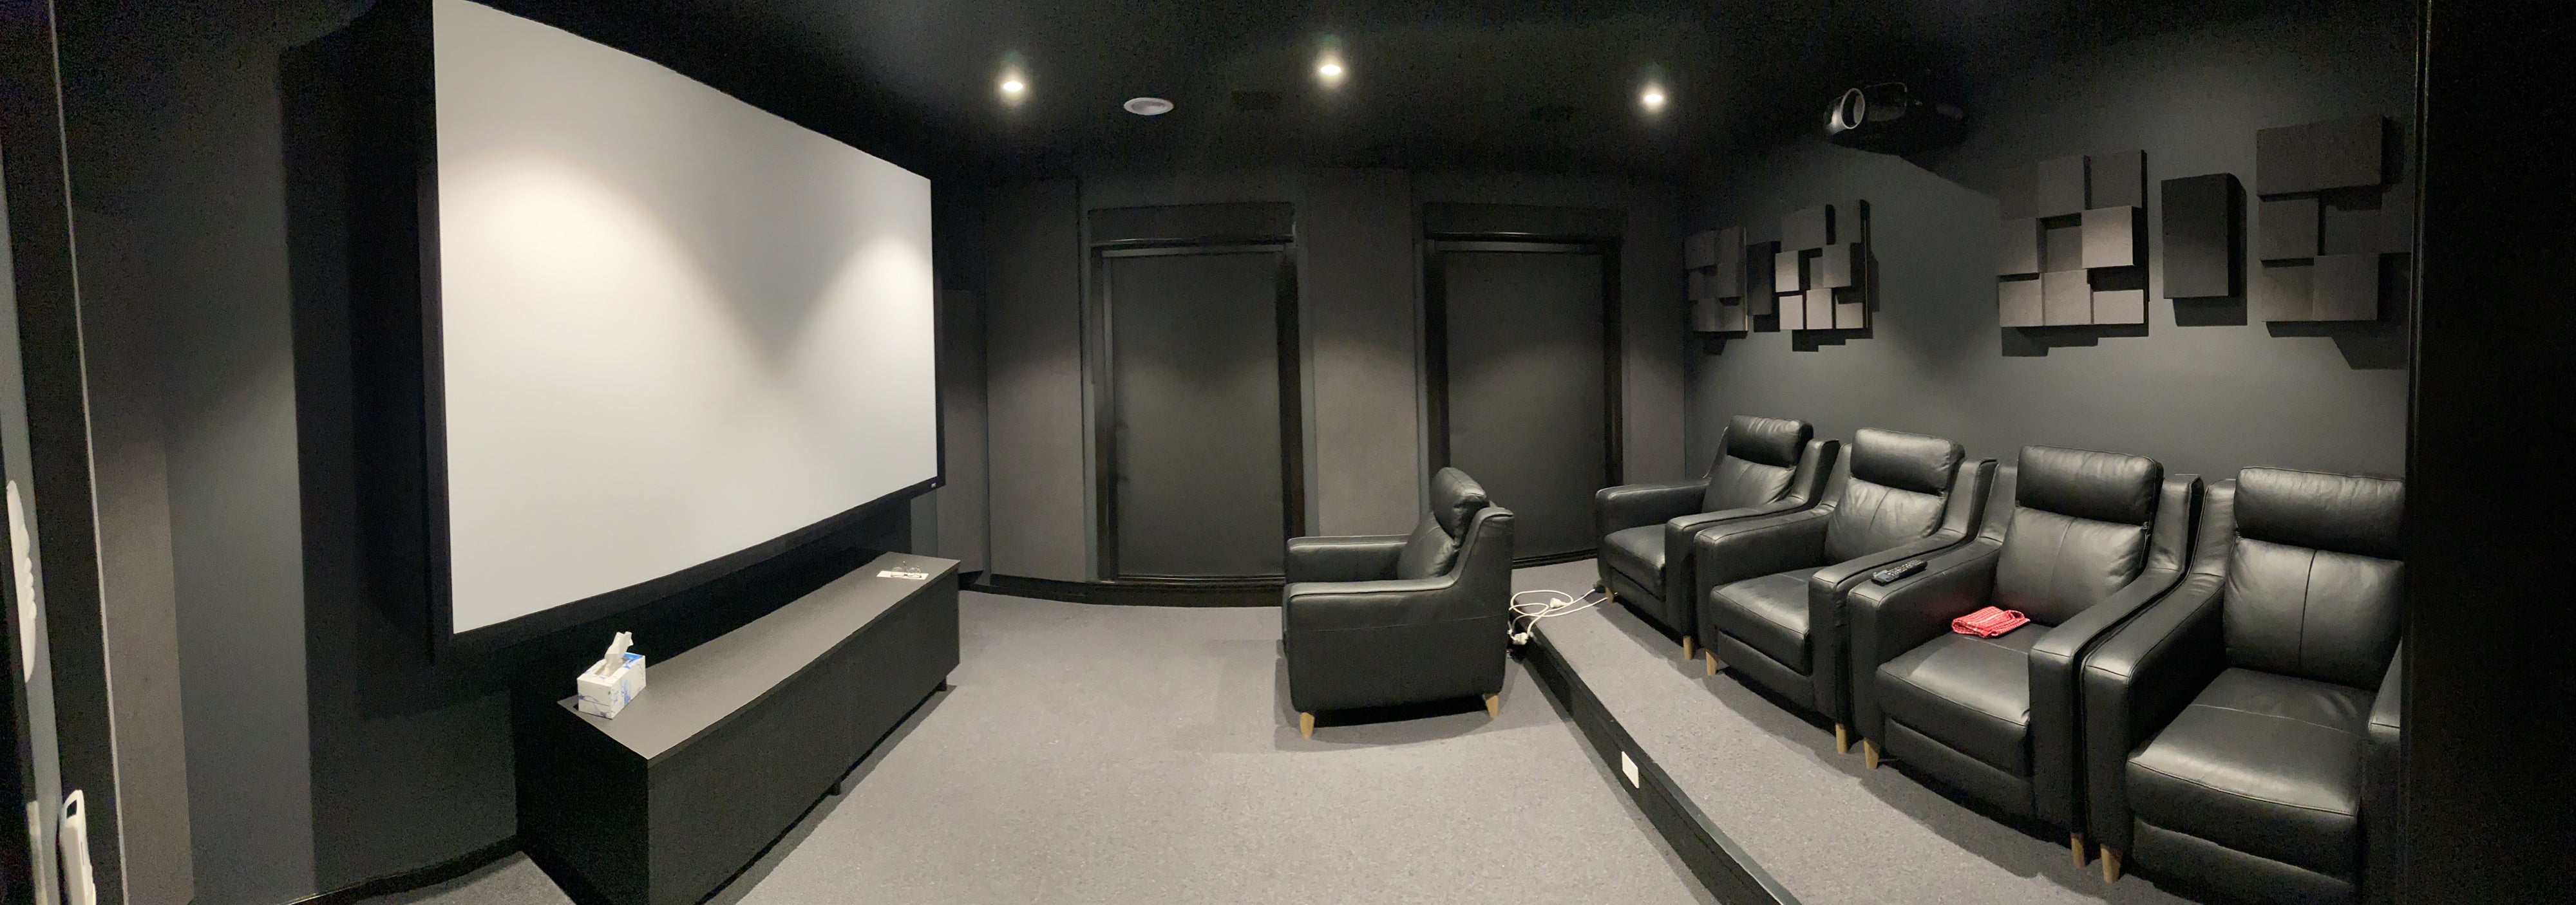 Home Cinema Setup.